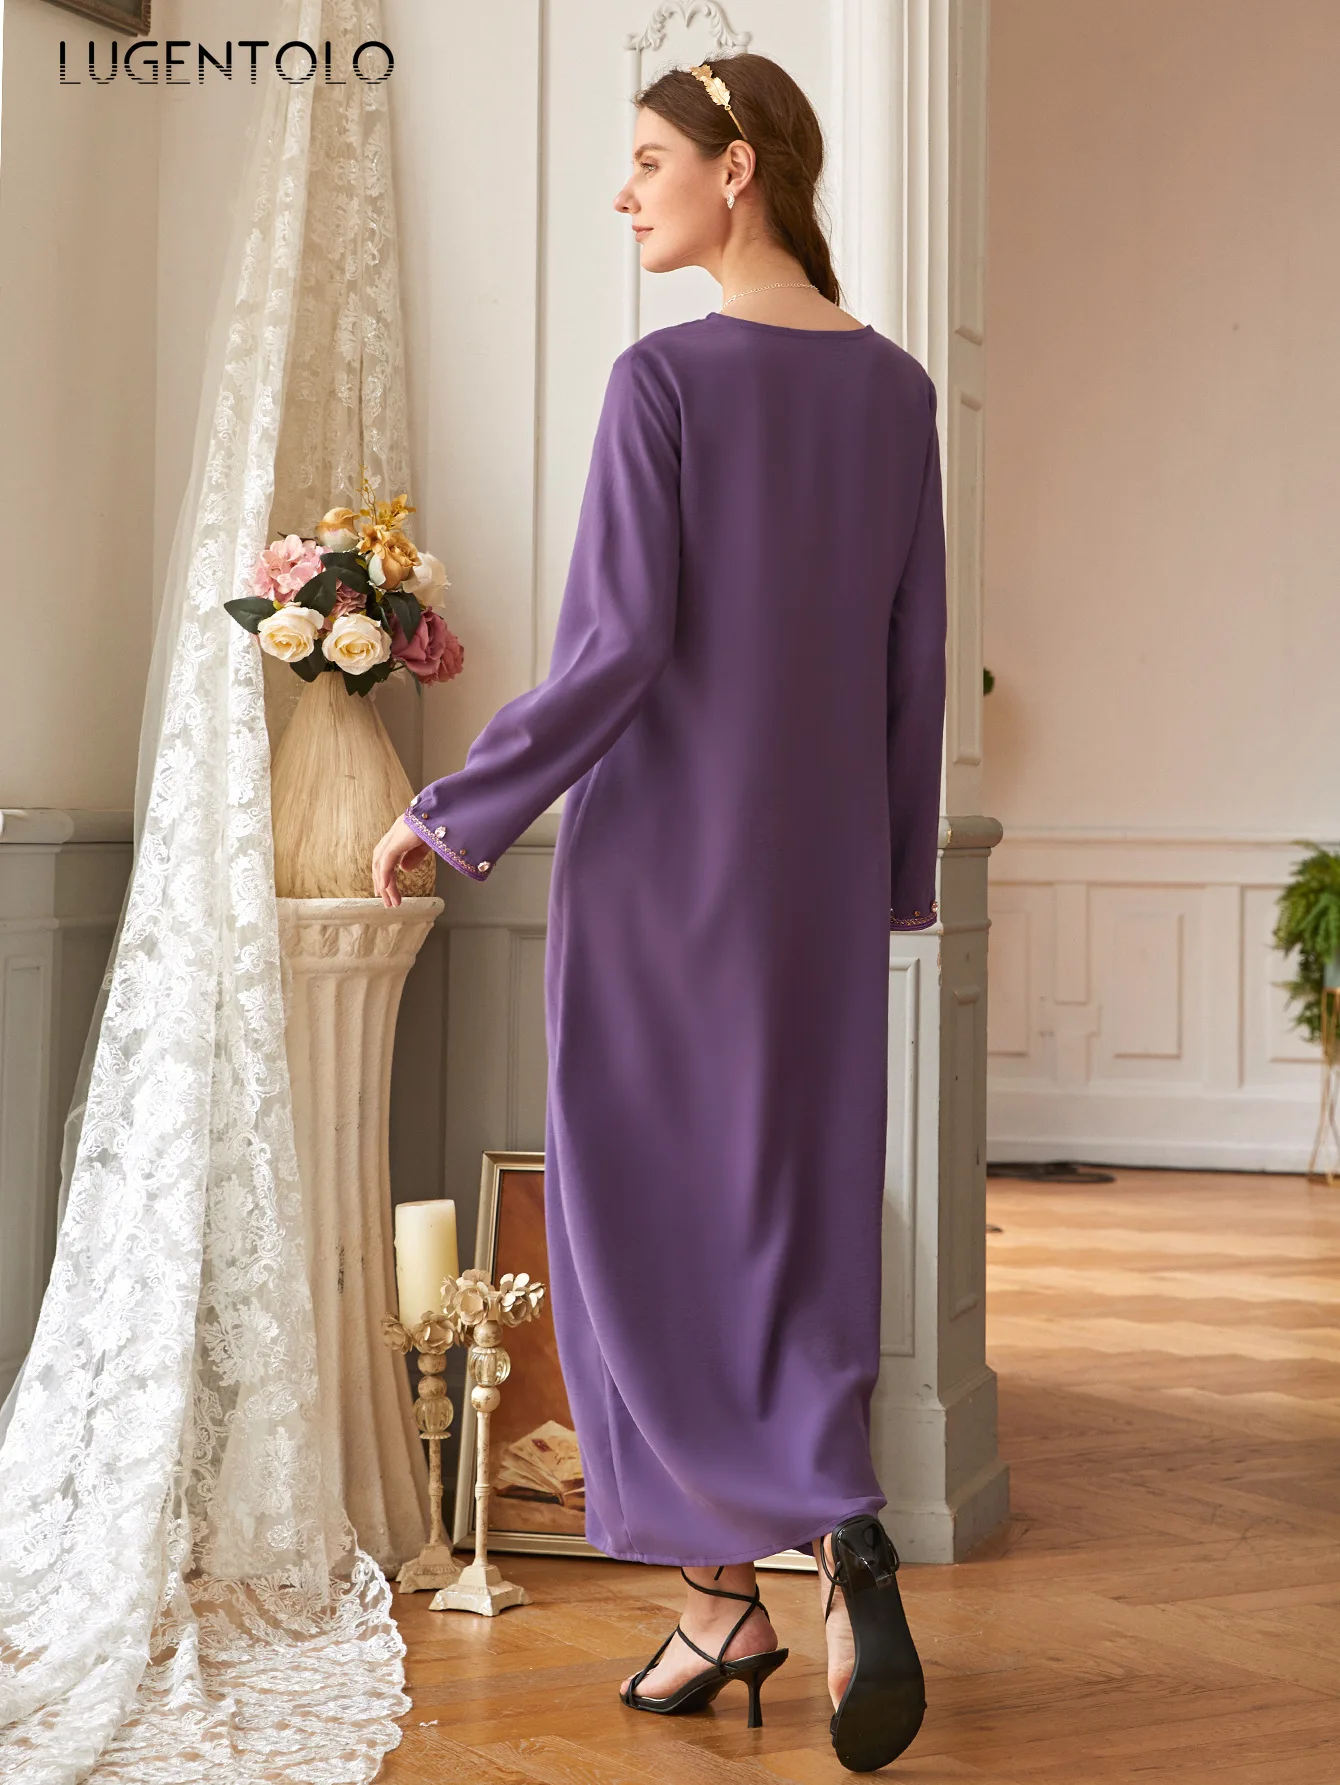 

Lugentolo Women Elegant Dress Fashion Muslim Vintage Purple Yarn-Dyed Hand-Stitched V-neck Diamond Dress Lady Dinner Maxi Dress